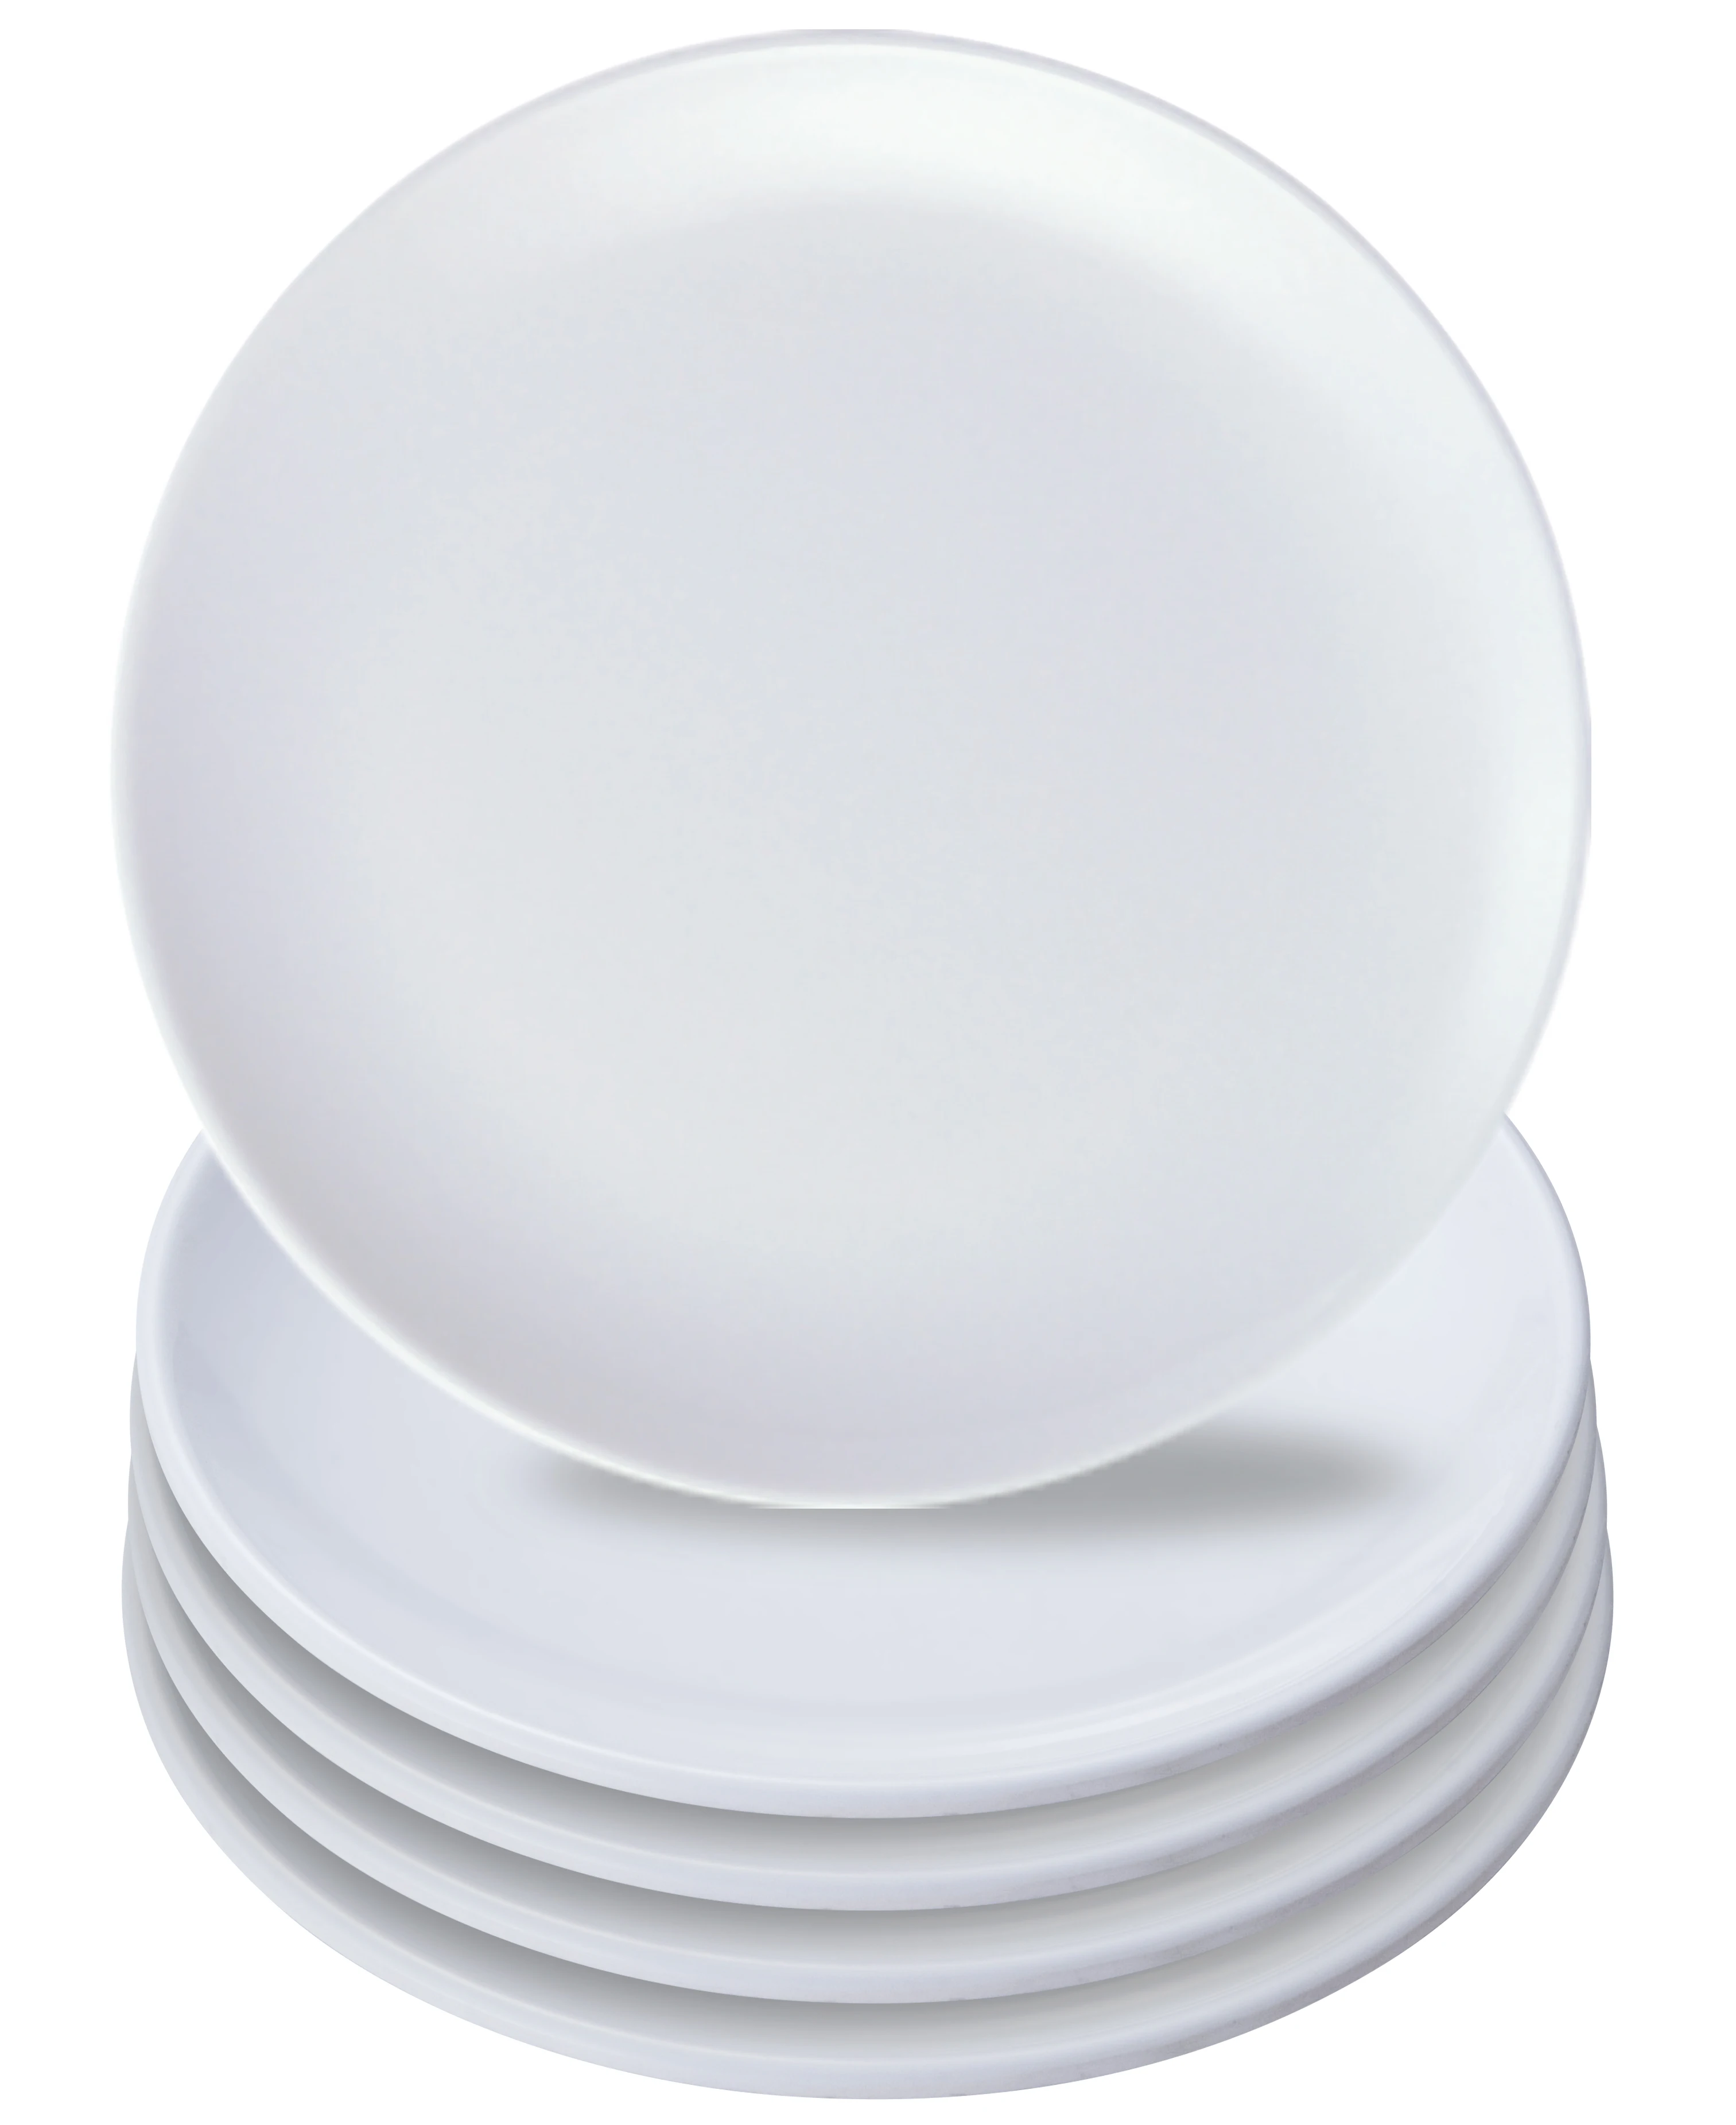 

8 Inch White Melamine dinner plates Wholesale Ultra-Durable Restaurant Dessert Cake Salad plates, Customized